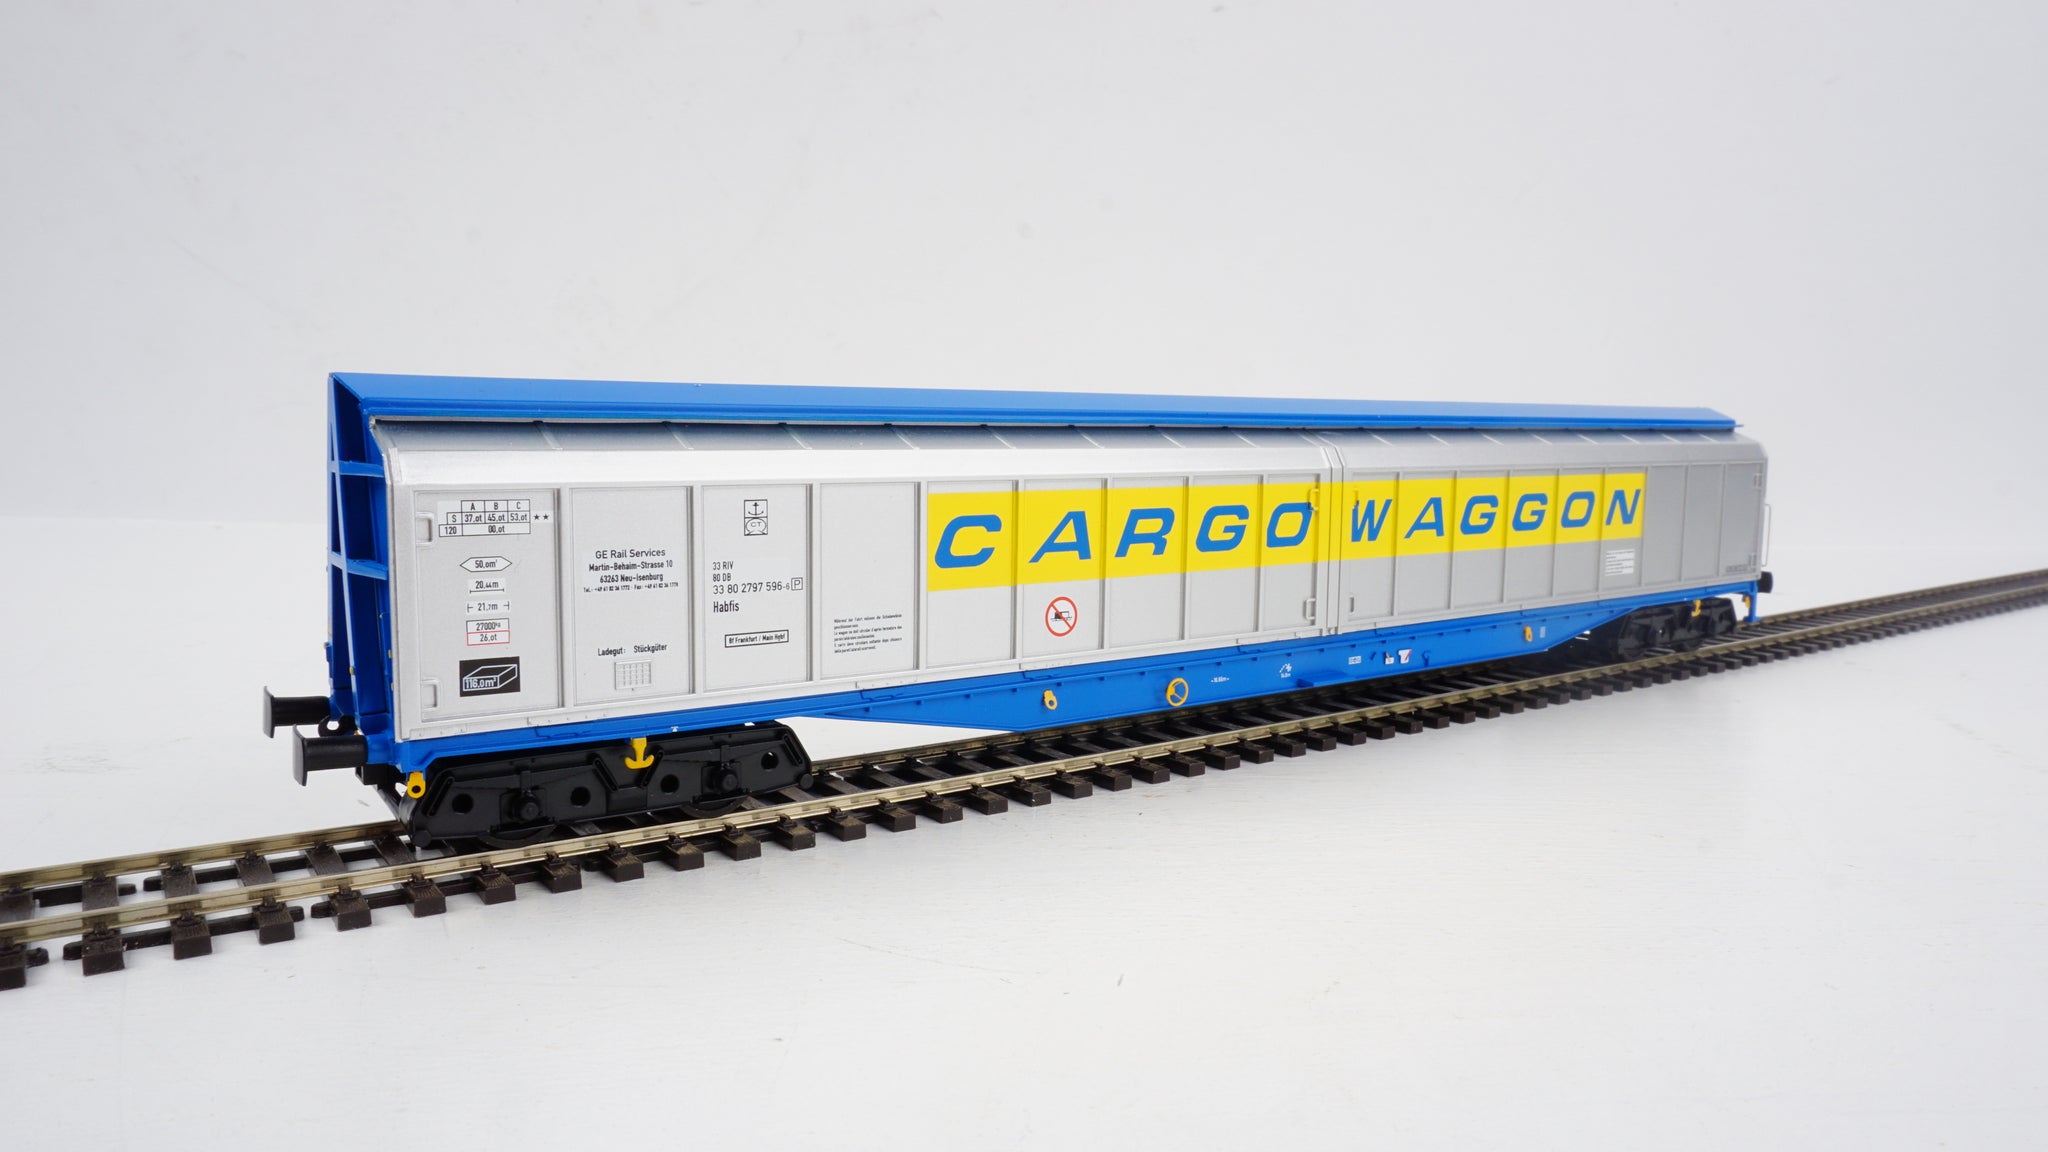 Cargowaggon 2797 596